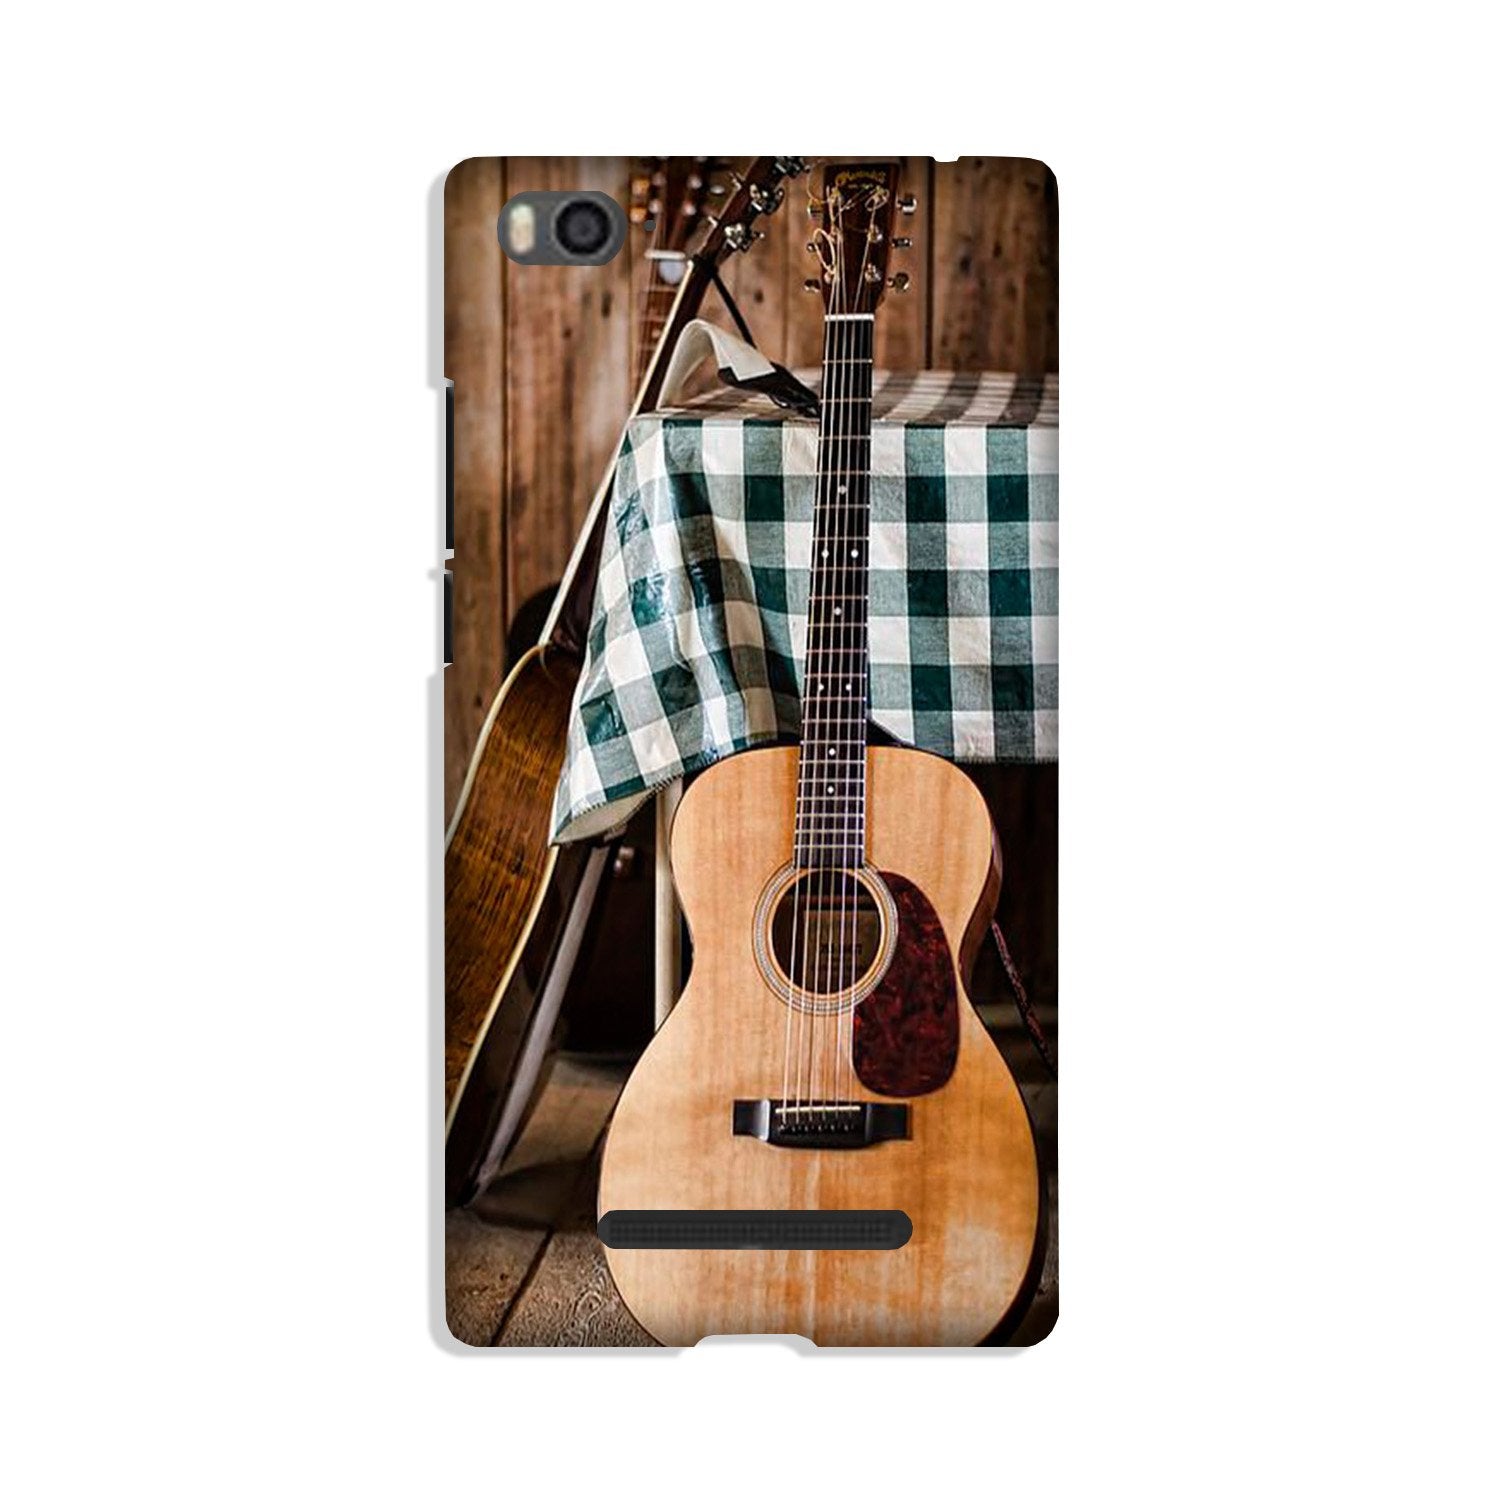 Guitar2 Case for Xiaomi Mi 4i